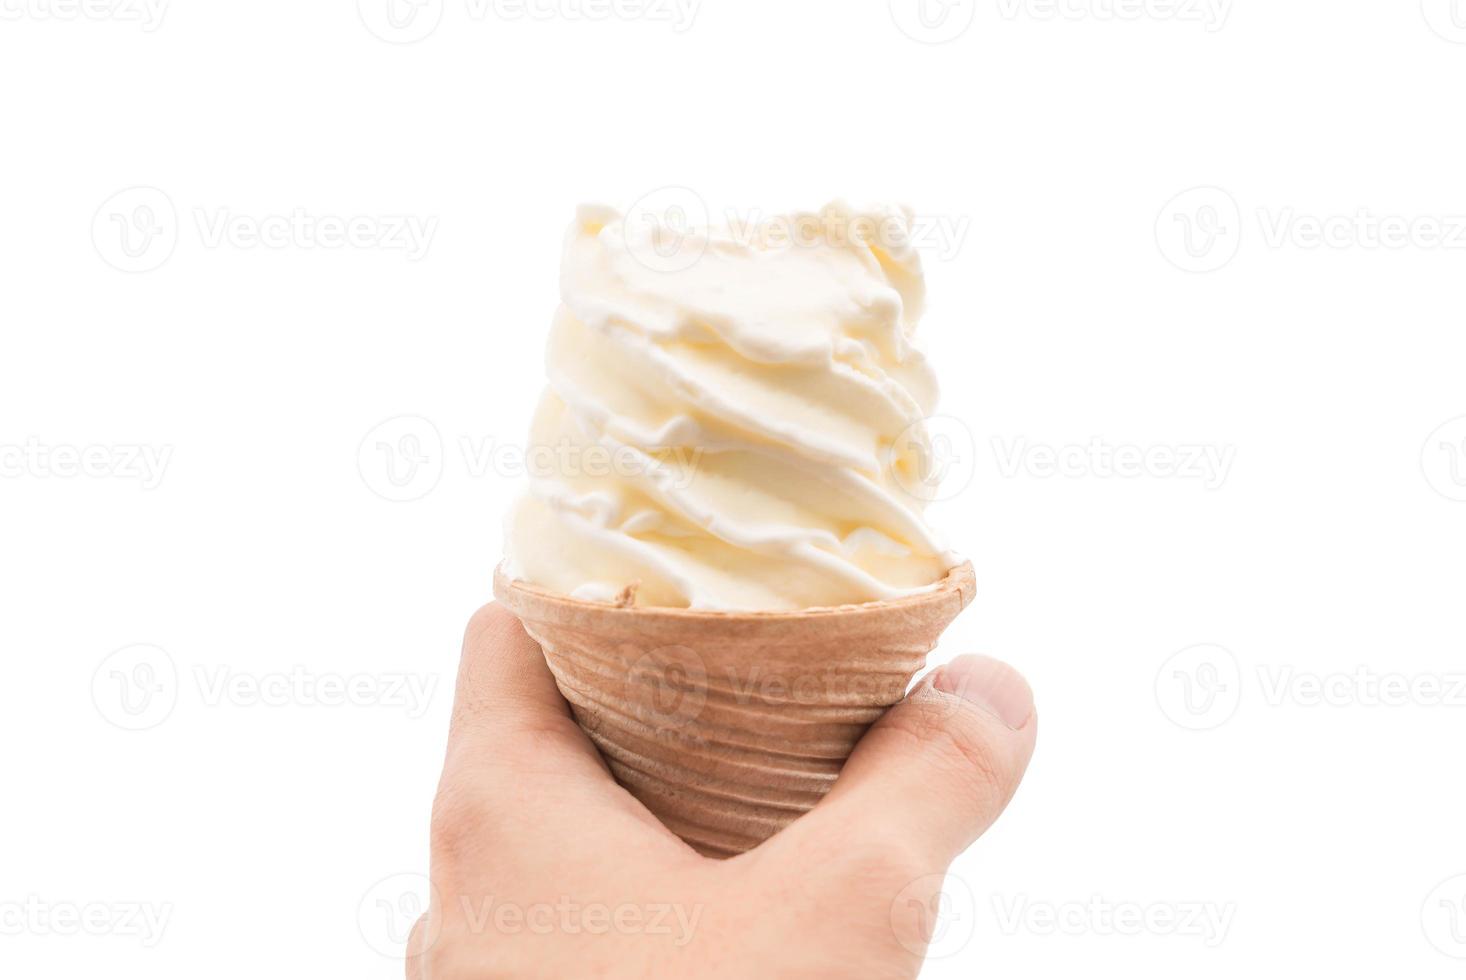 vaniljglasskotte på vit bakgrund foto